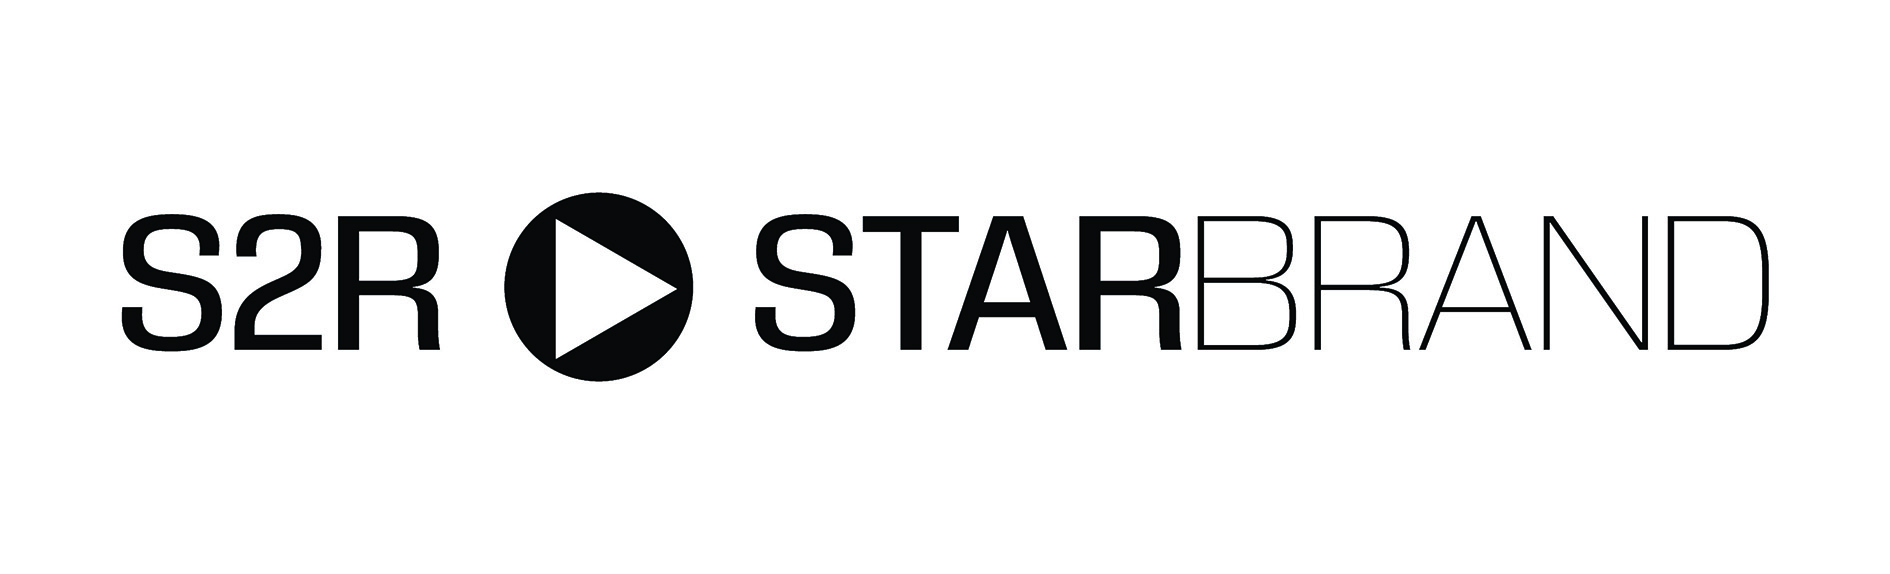 Logo Starbrand sans cartouche en noir